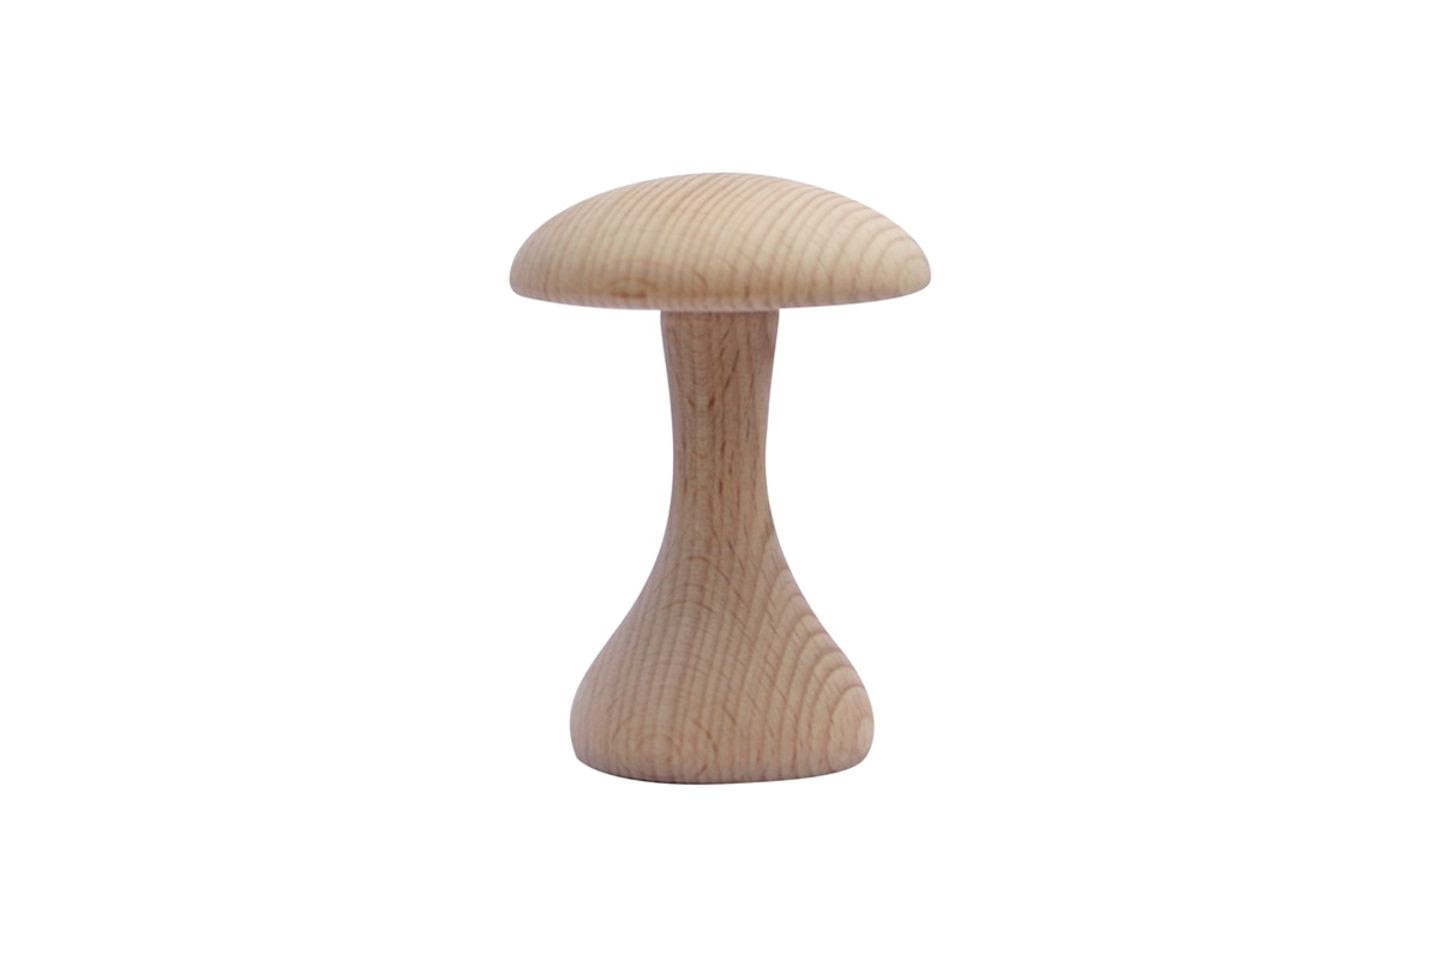 Holzfigur "Funghi" von Applicata